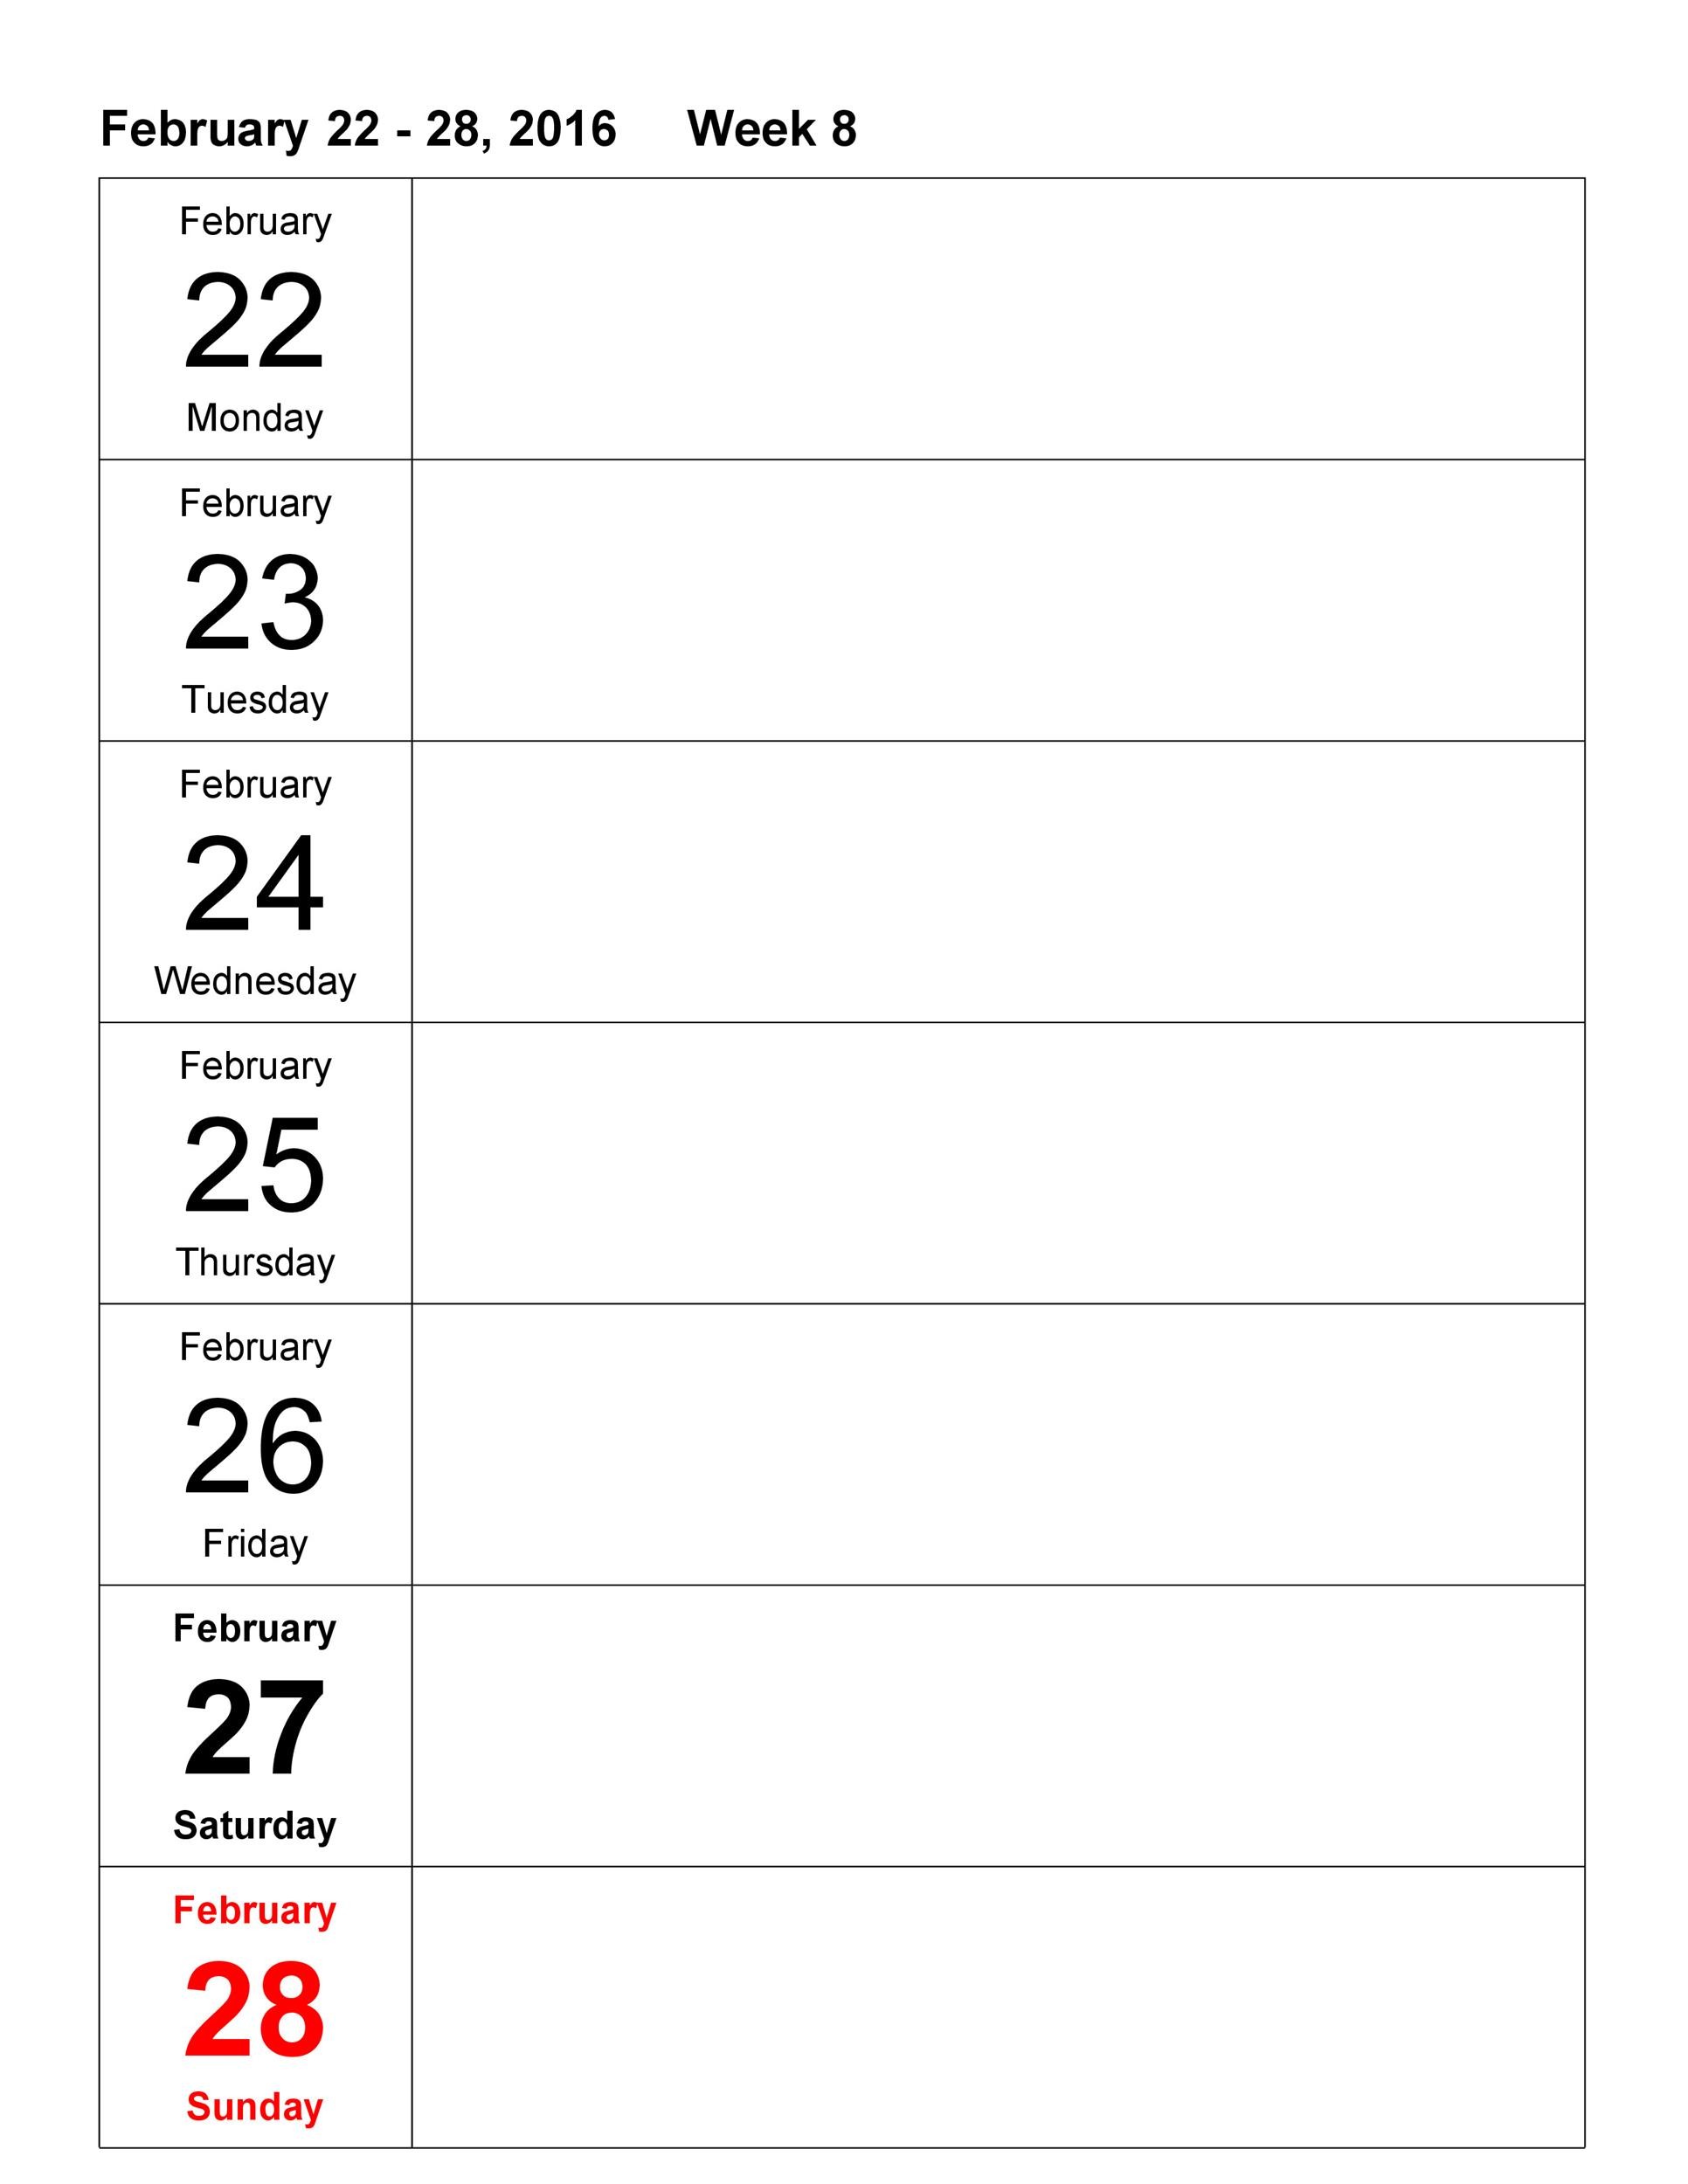 Printable Weekly Blank Calendar Template Printable Templates